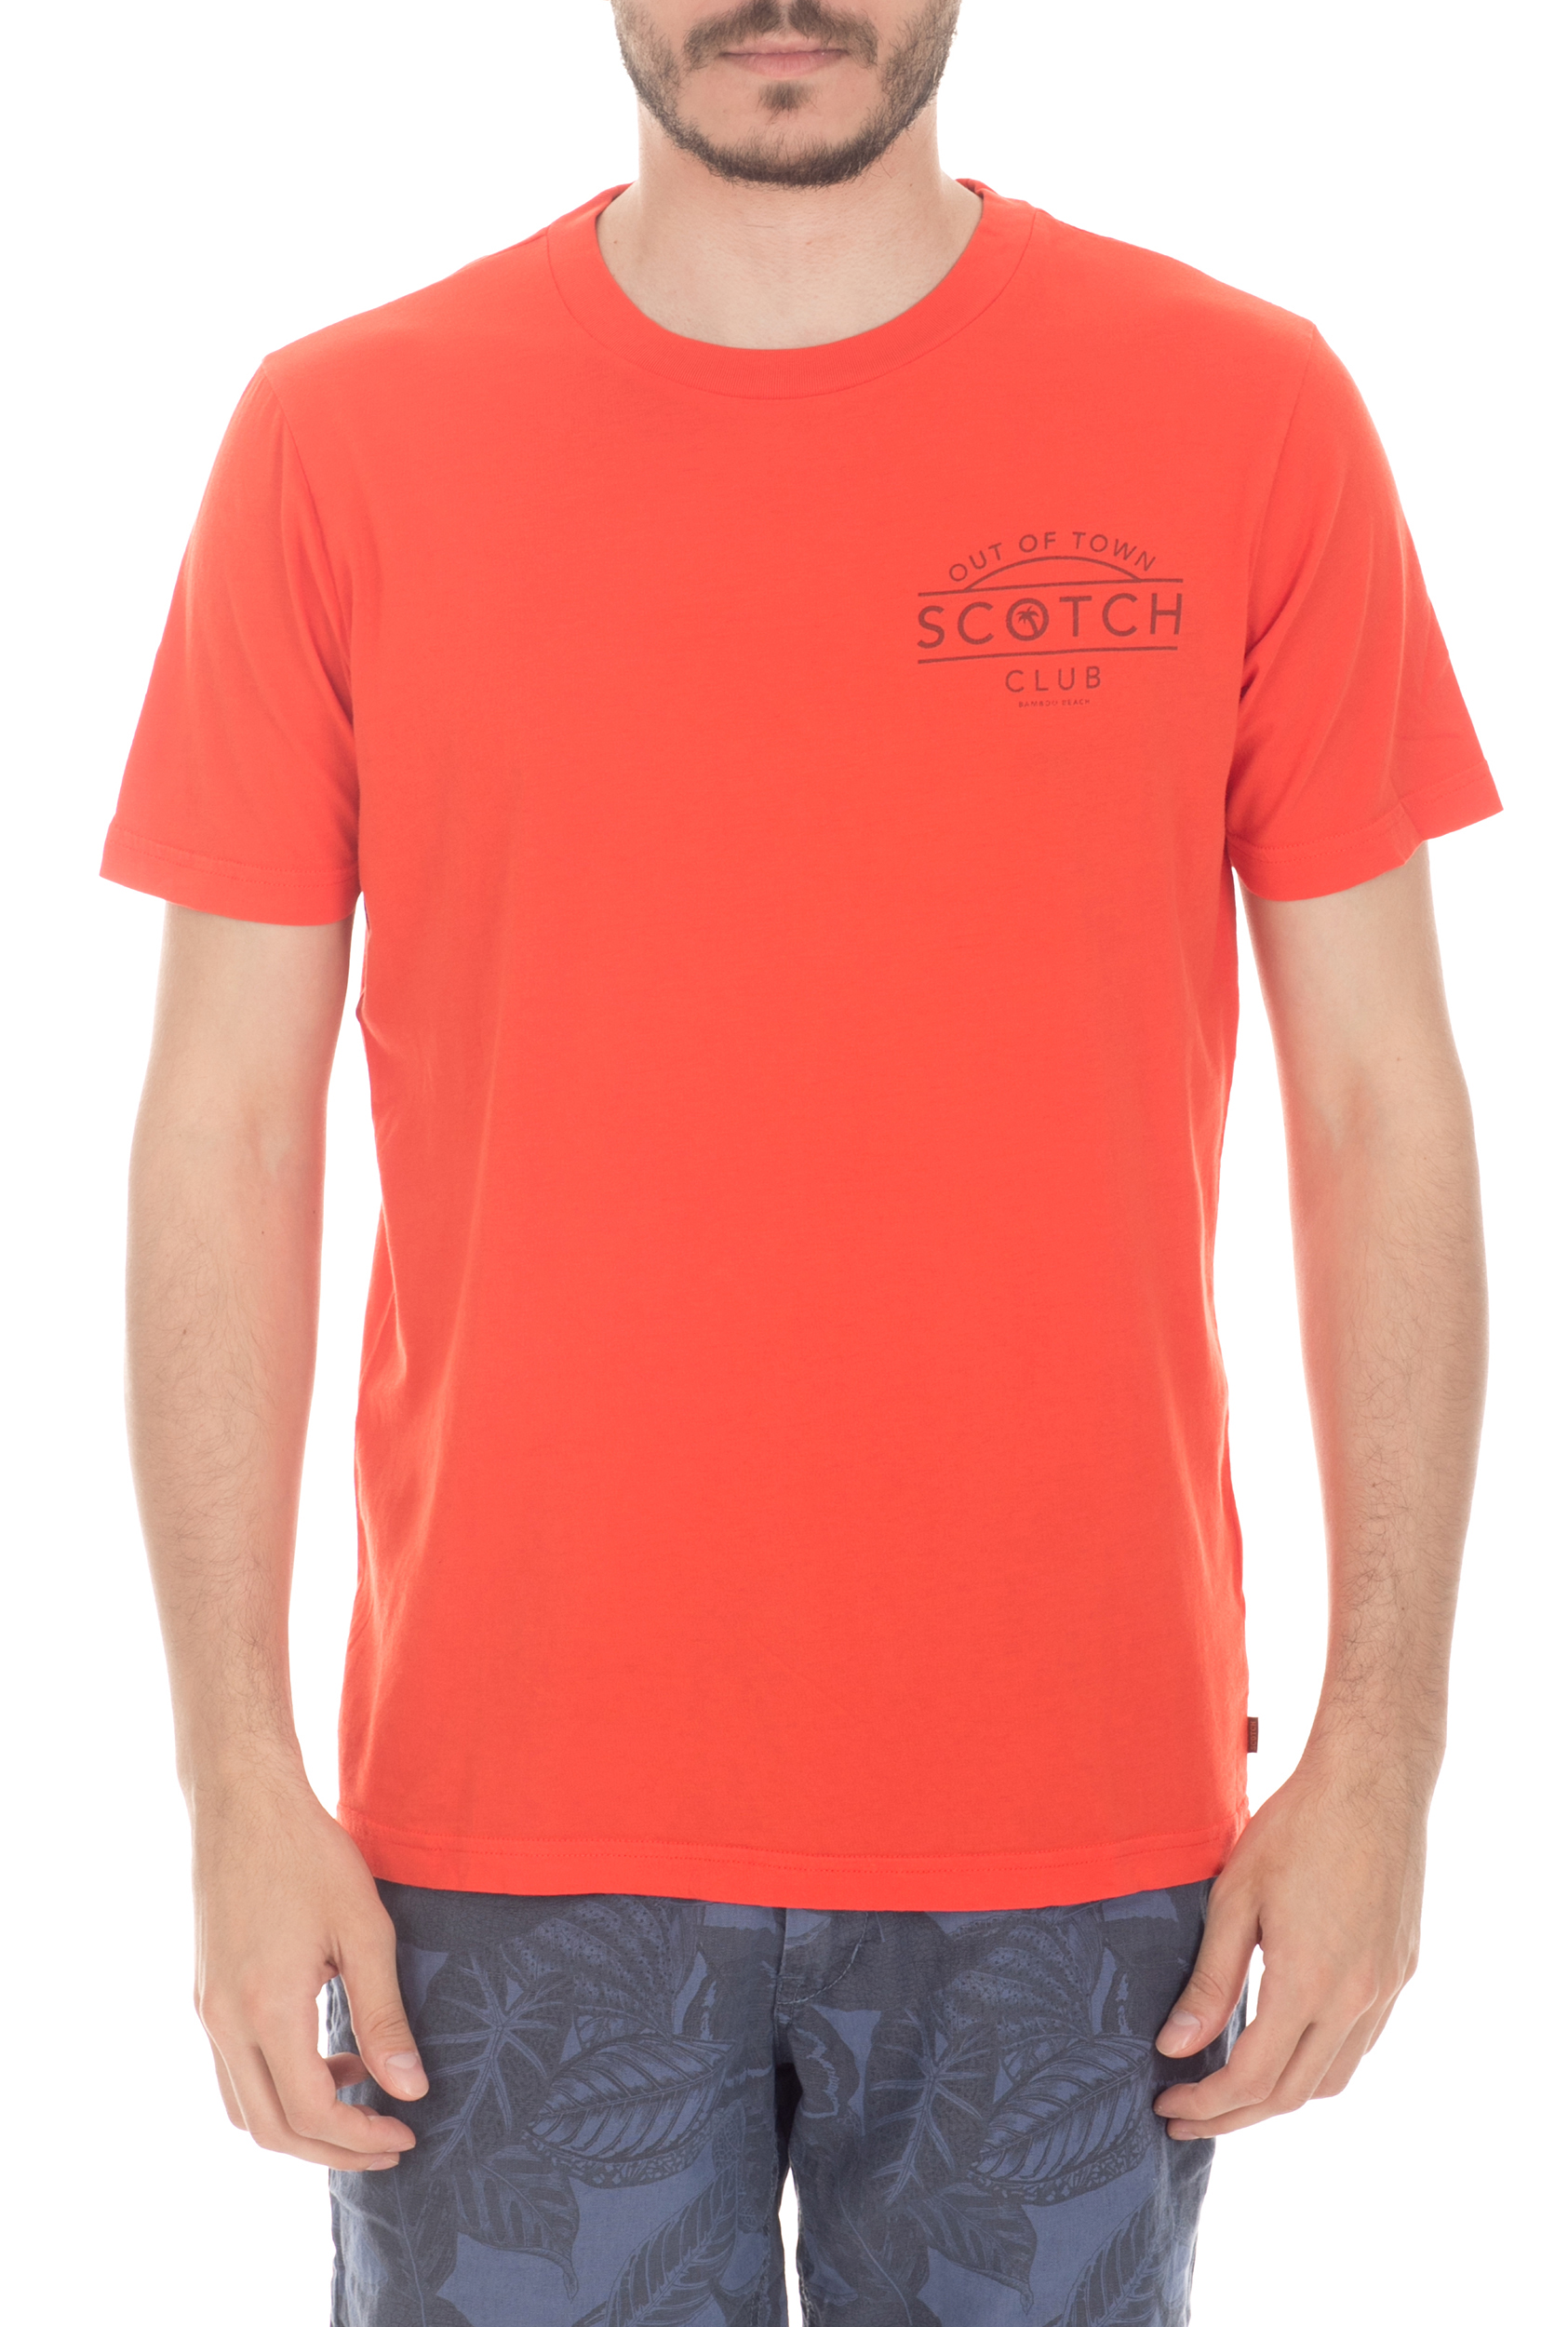 SCOTCH & SODA - Ανδρική μπλούζα SCOTCH & SODA κόκκινη Ανδρικά/Ρούχα/Μπλούζες/Κοντομάνικες